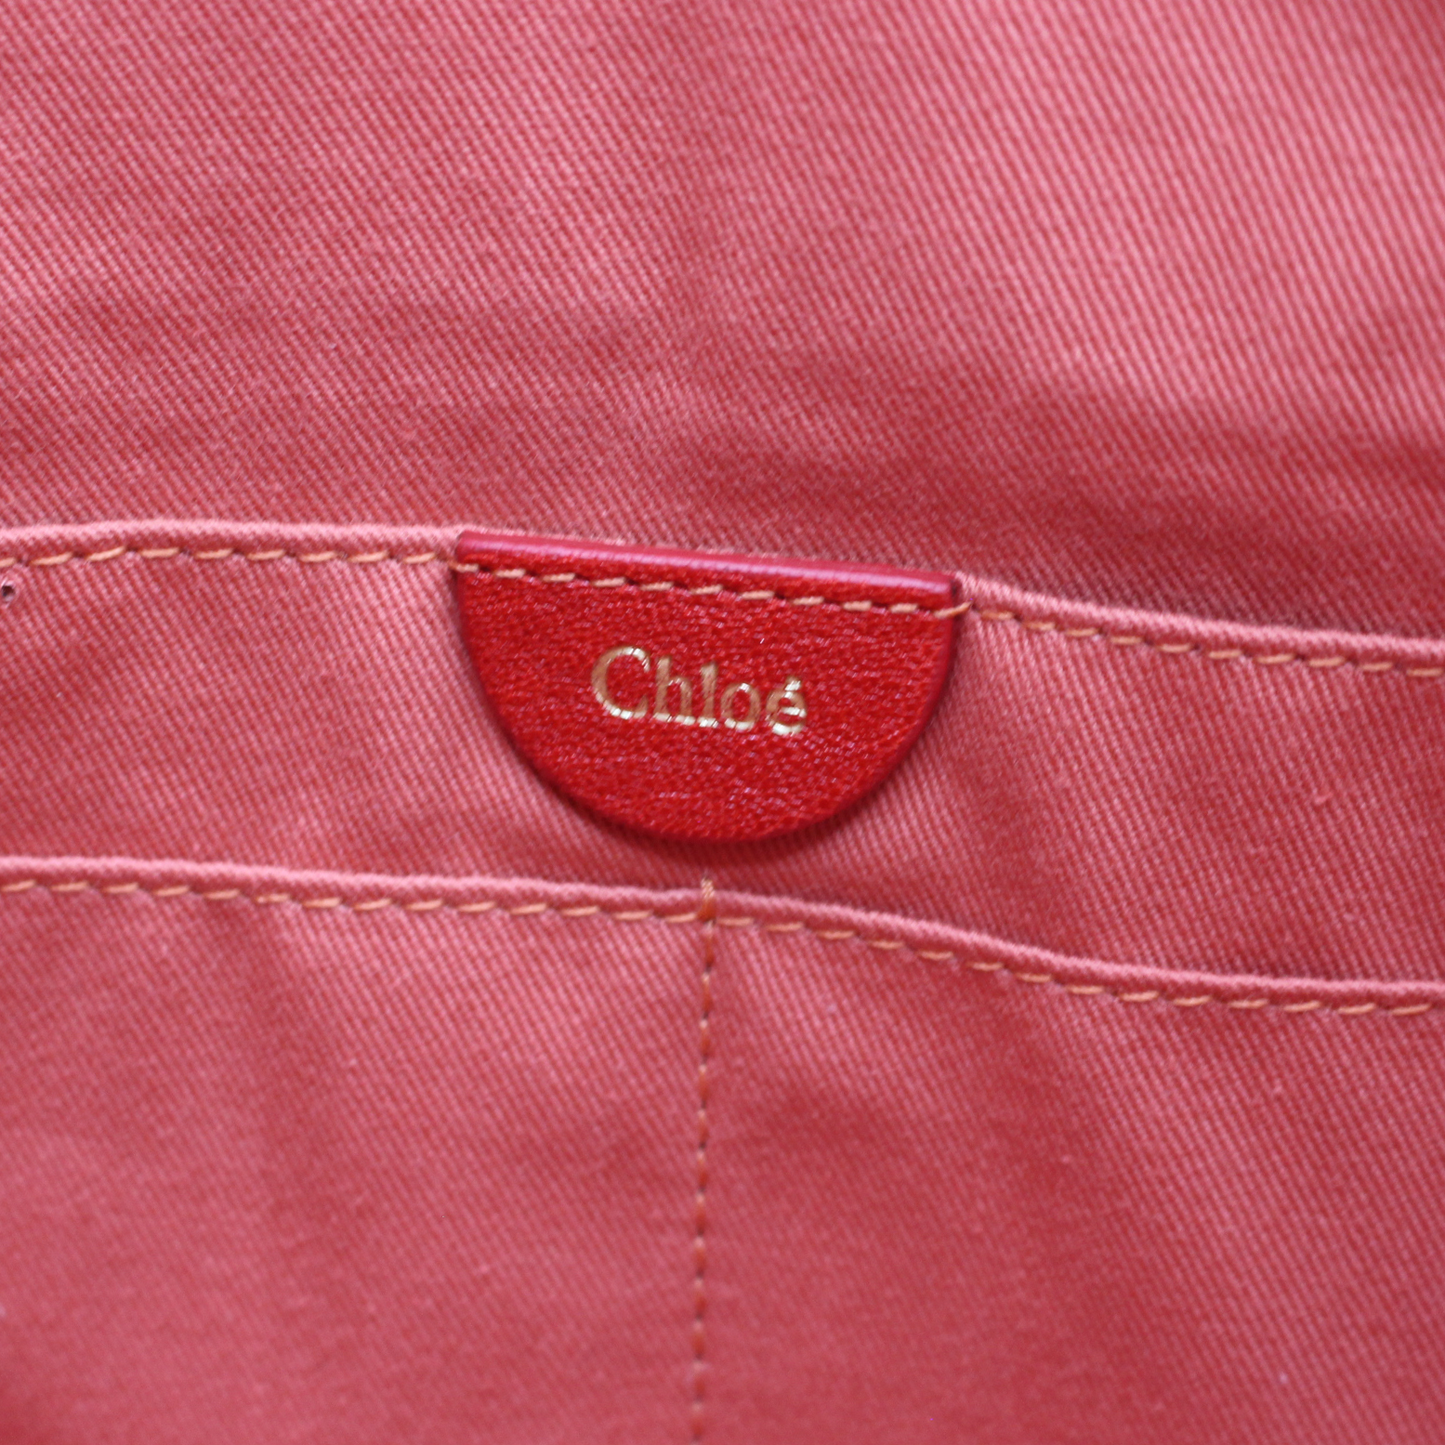 Chloe' Leather Clutch Bag